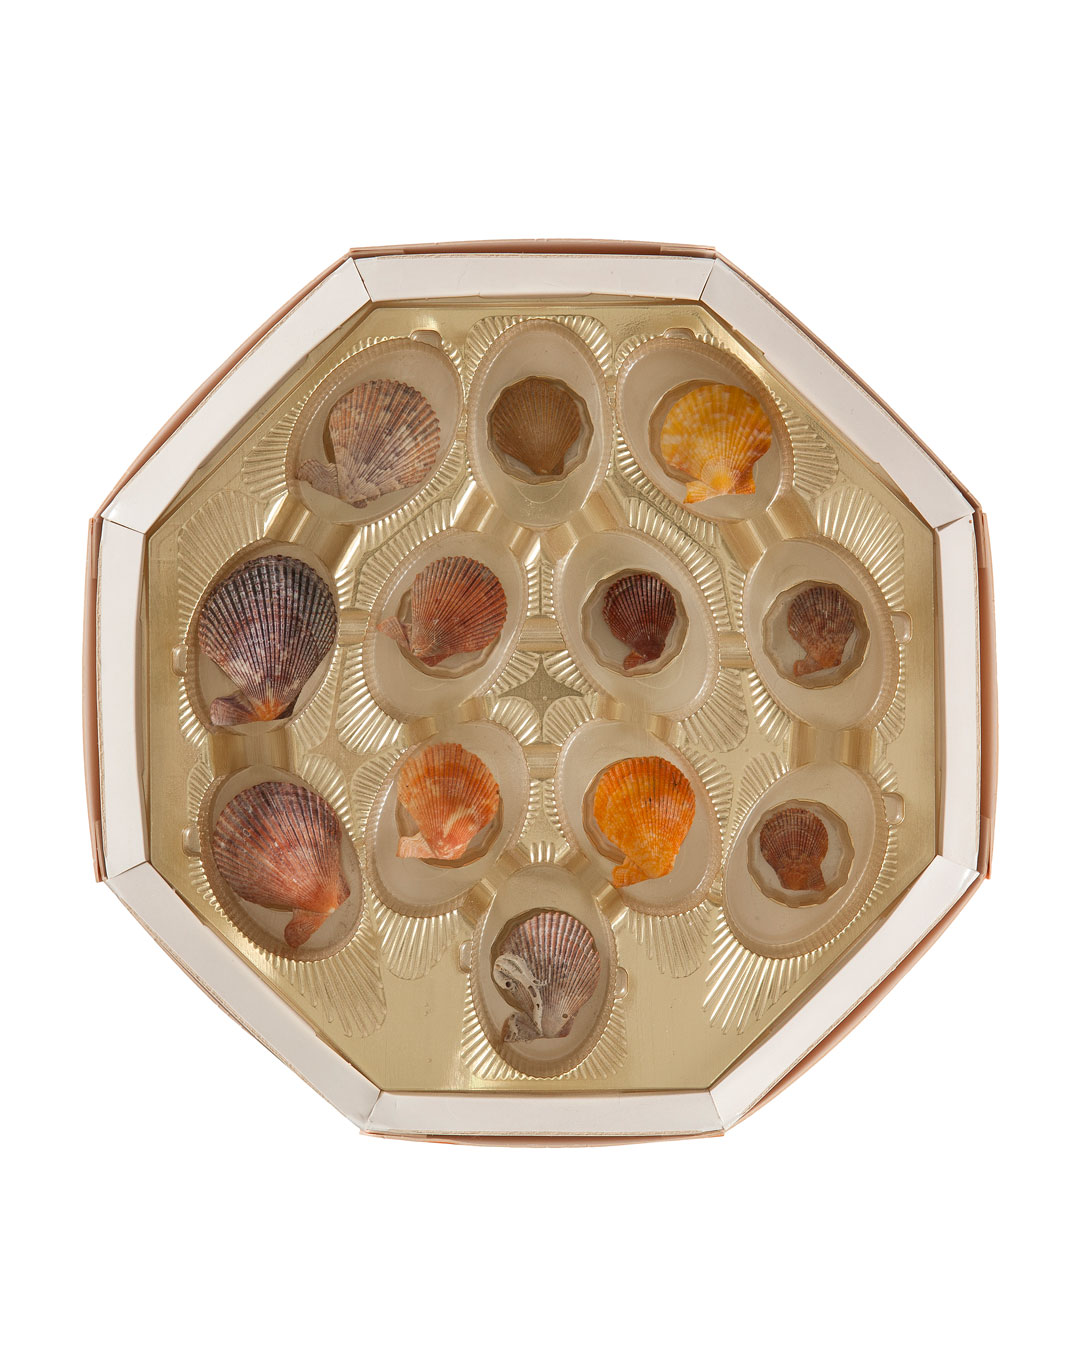 Annelies Planteijdt, Mooie stad – Collier en schelpen (Beautiful City - Necklace and Shells), shells in bonbon box (image 2/2)